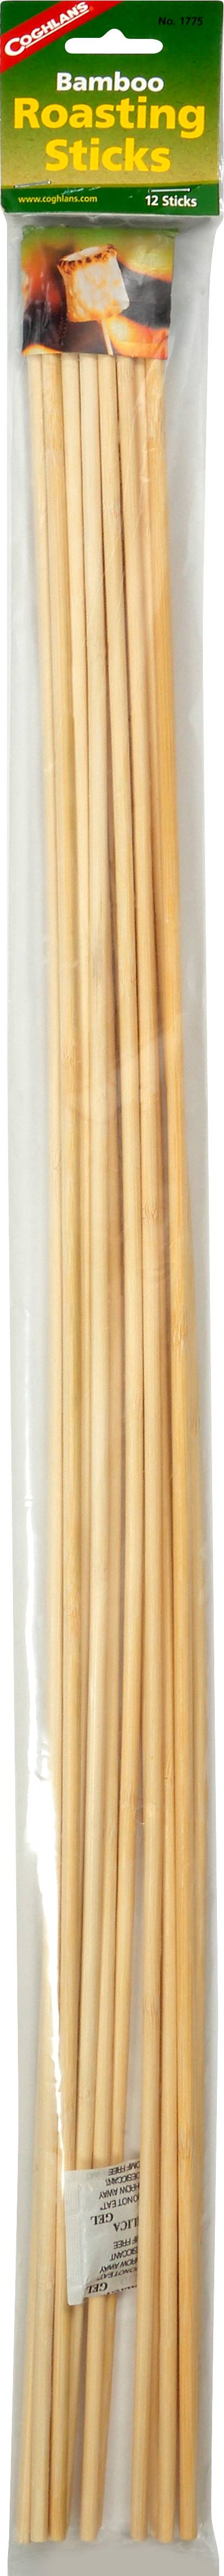 Coghlan's Bamboo Roasting Sticks (12 ct)